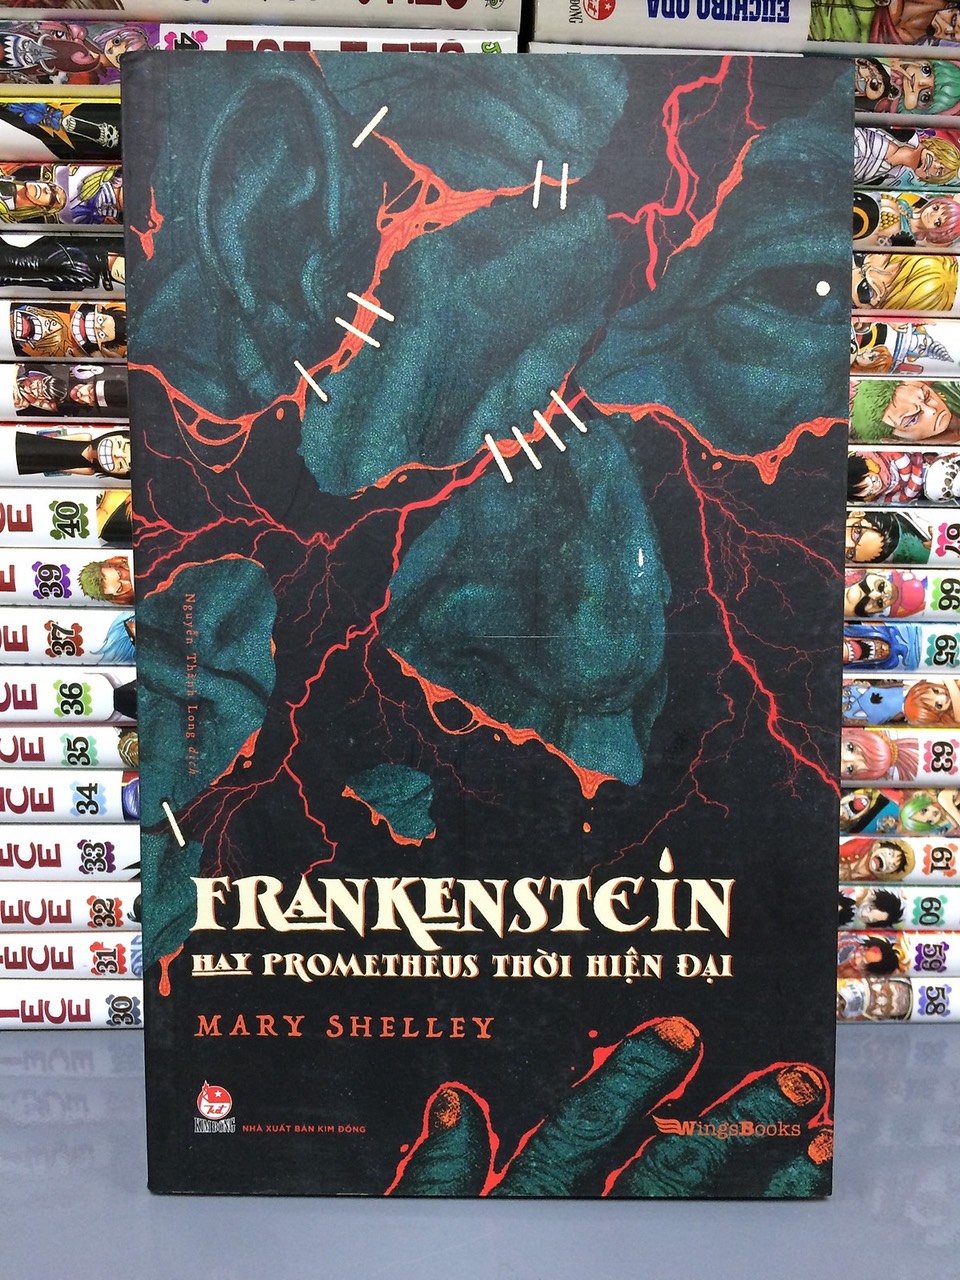 Frankenstein - hay Prometheus thời hiện đại